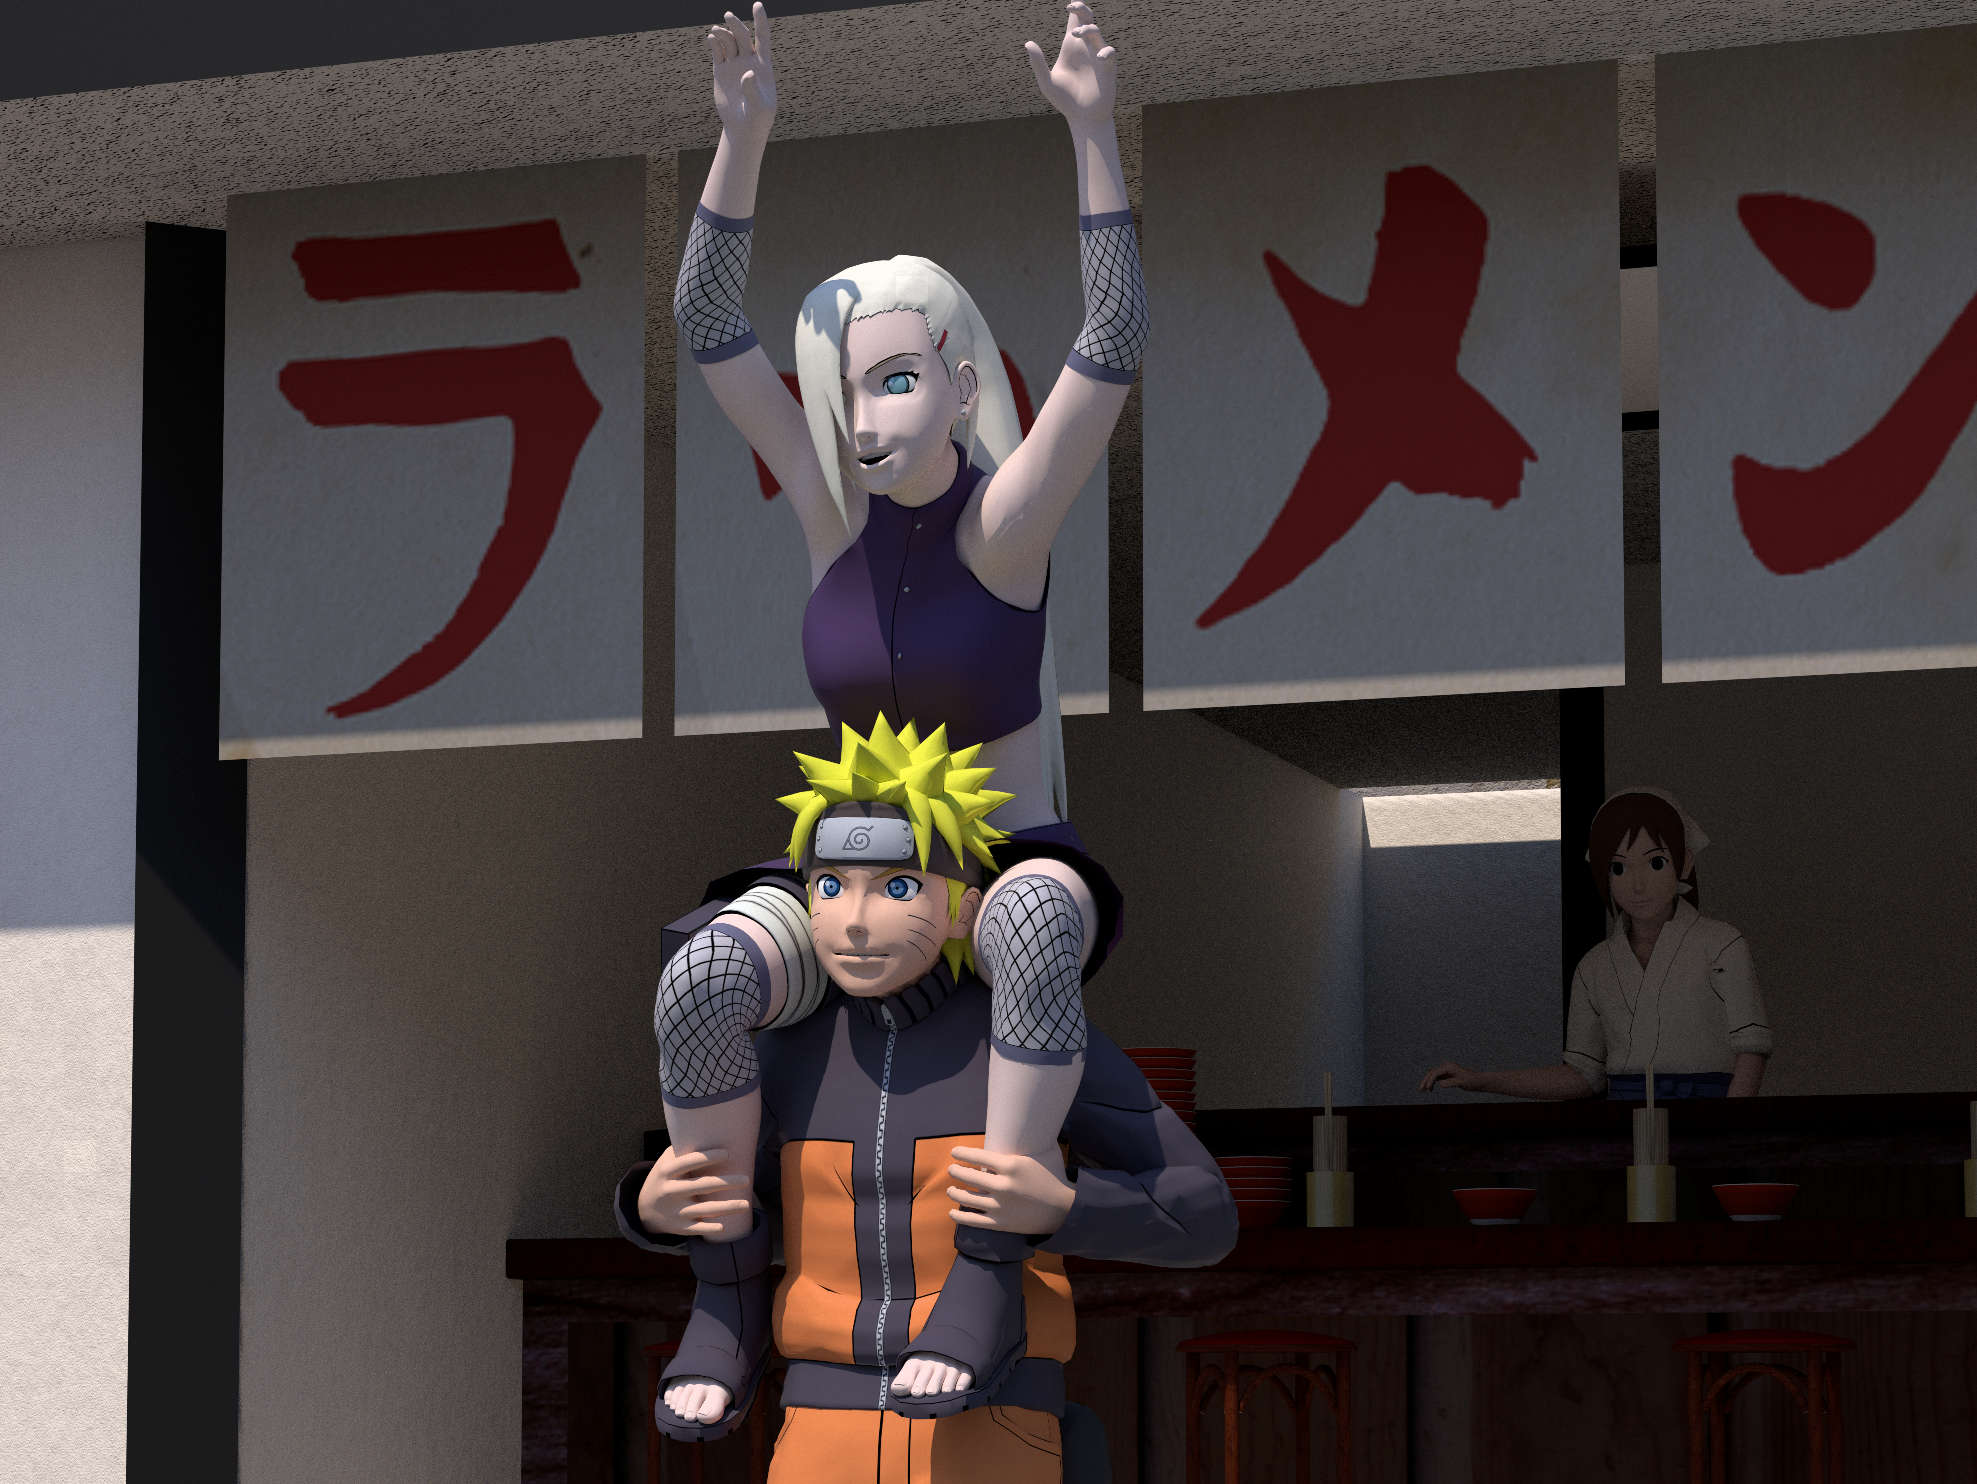 Anime Naruto HD Wallpaper | Background Image